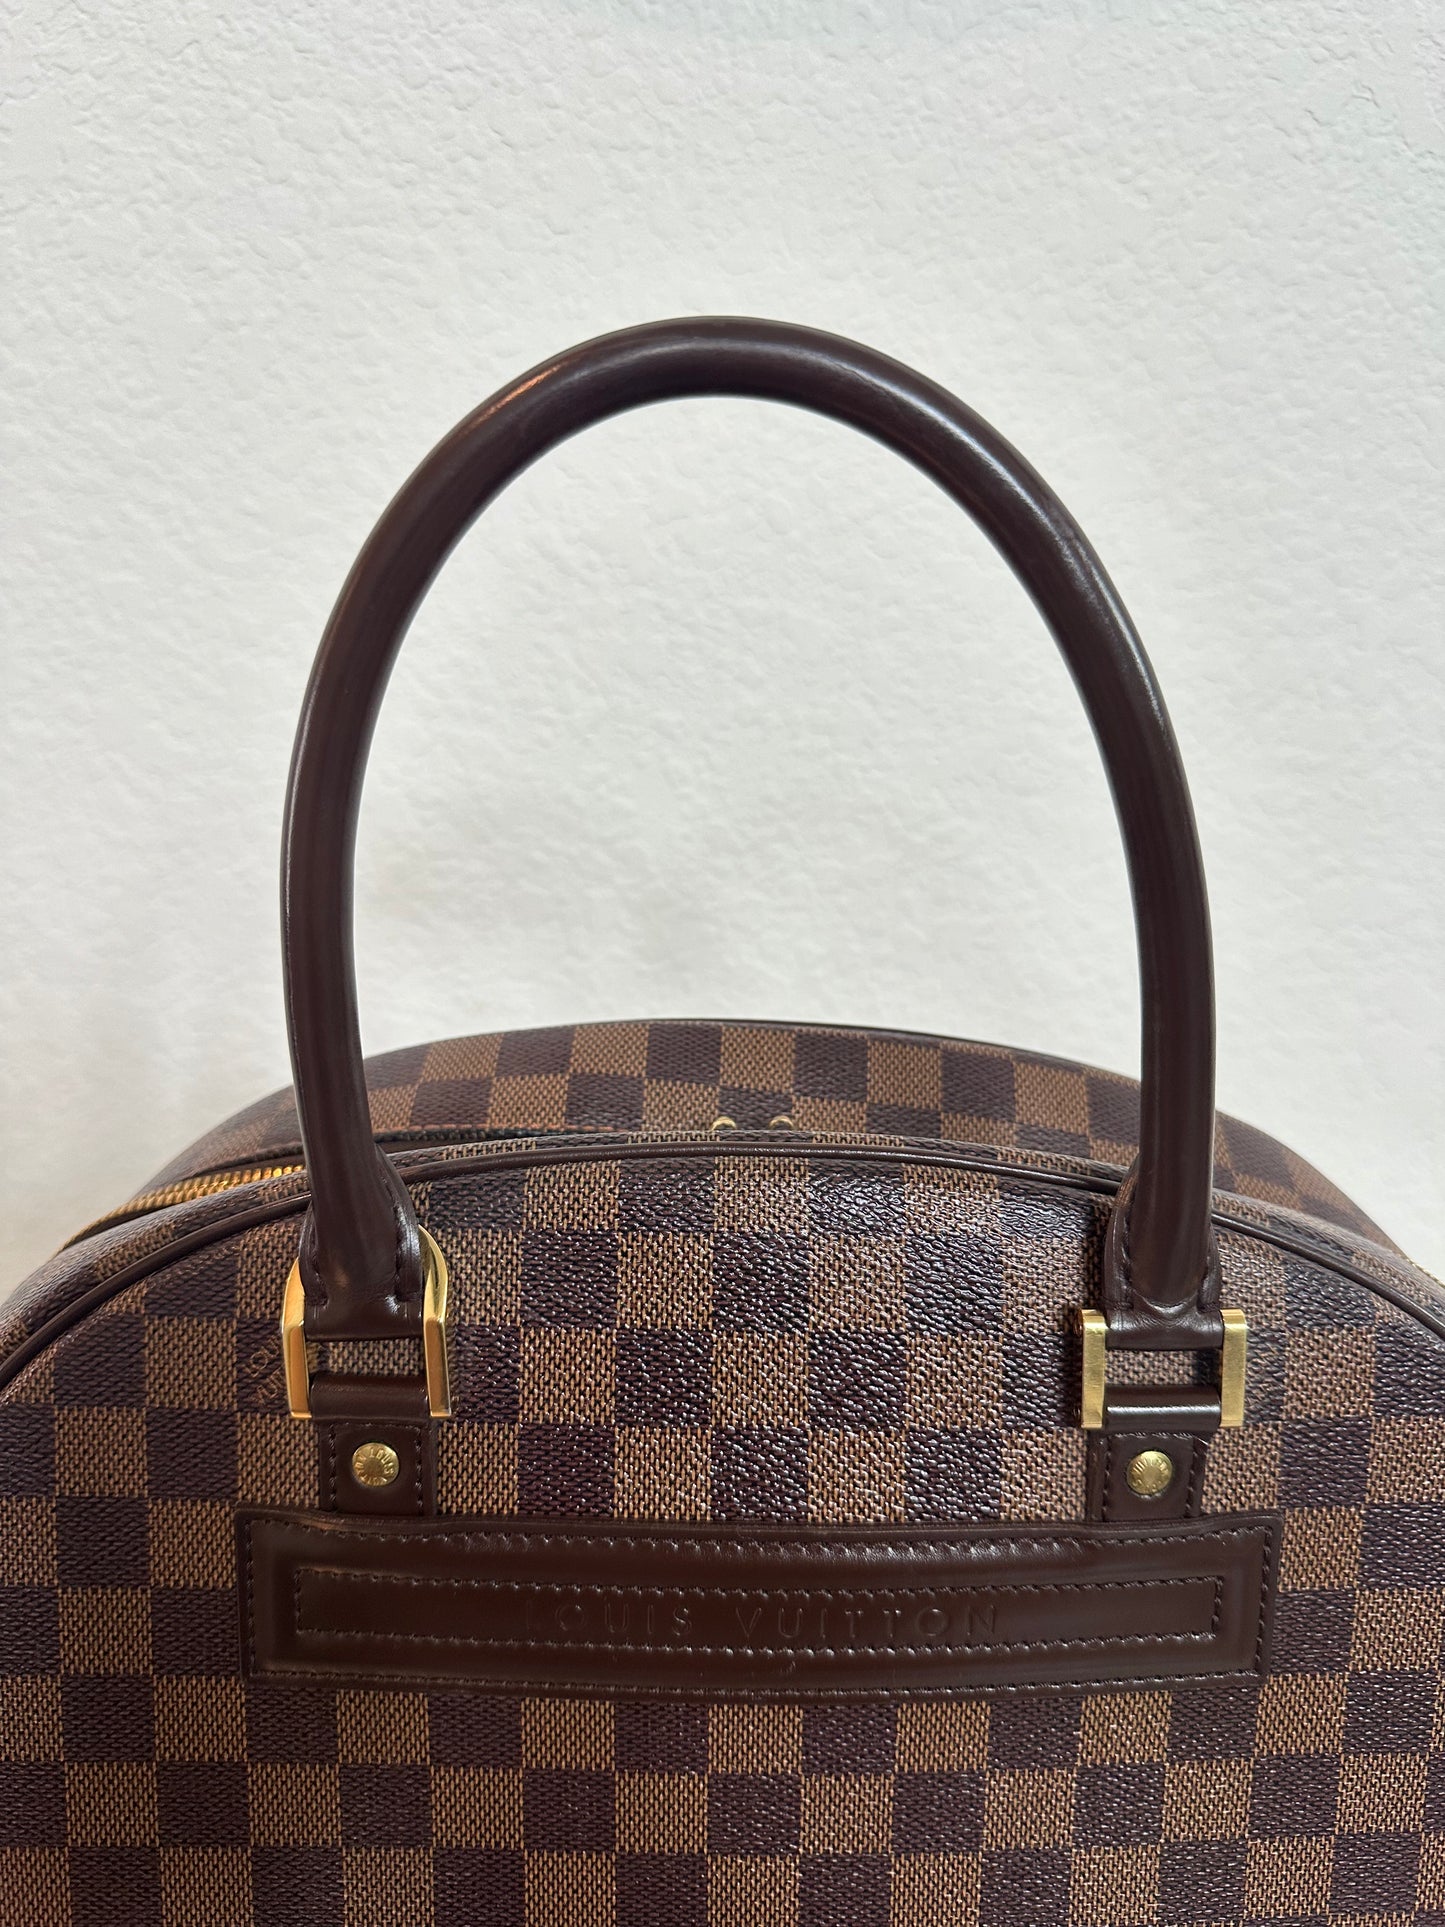 Pre-owned Authentic Louis Vuitton Nolita Damier Ebene Handbag